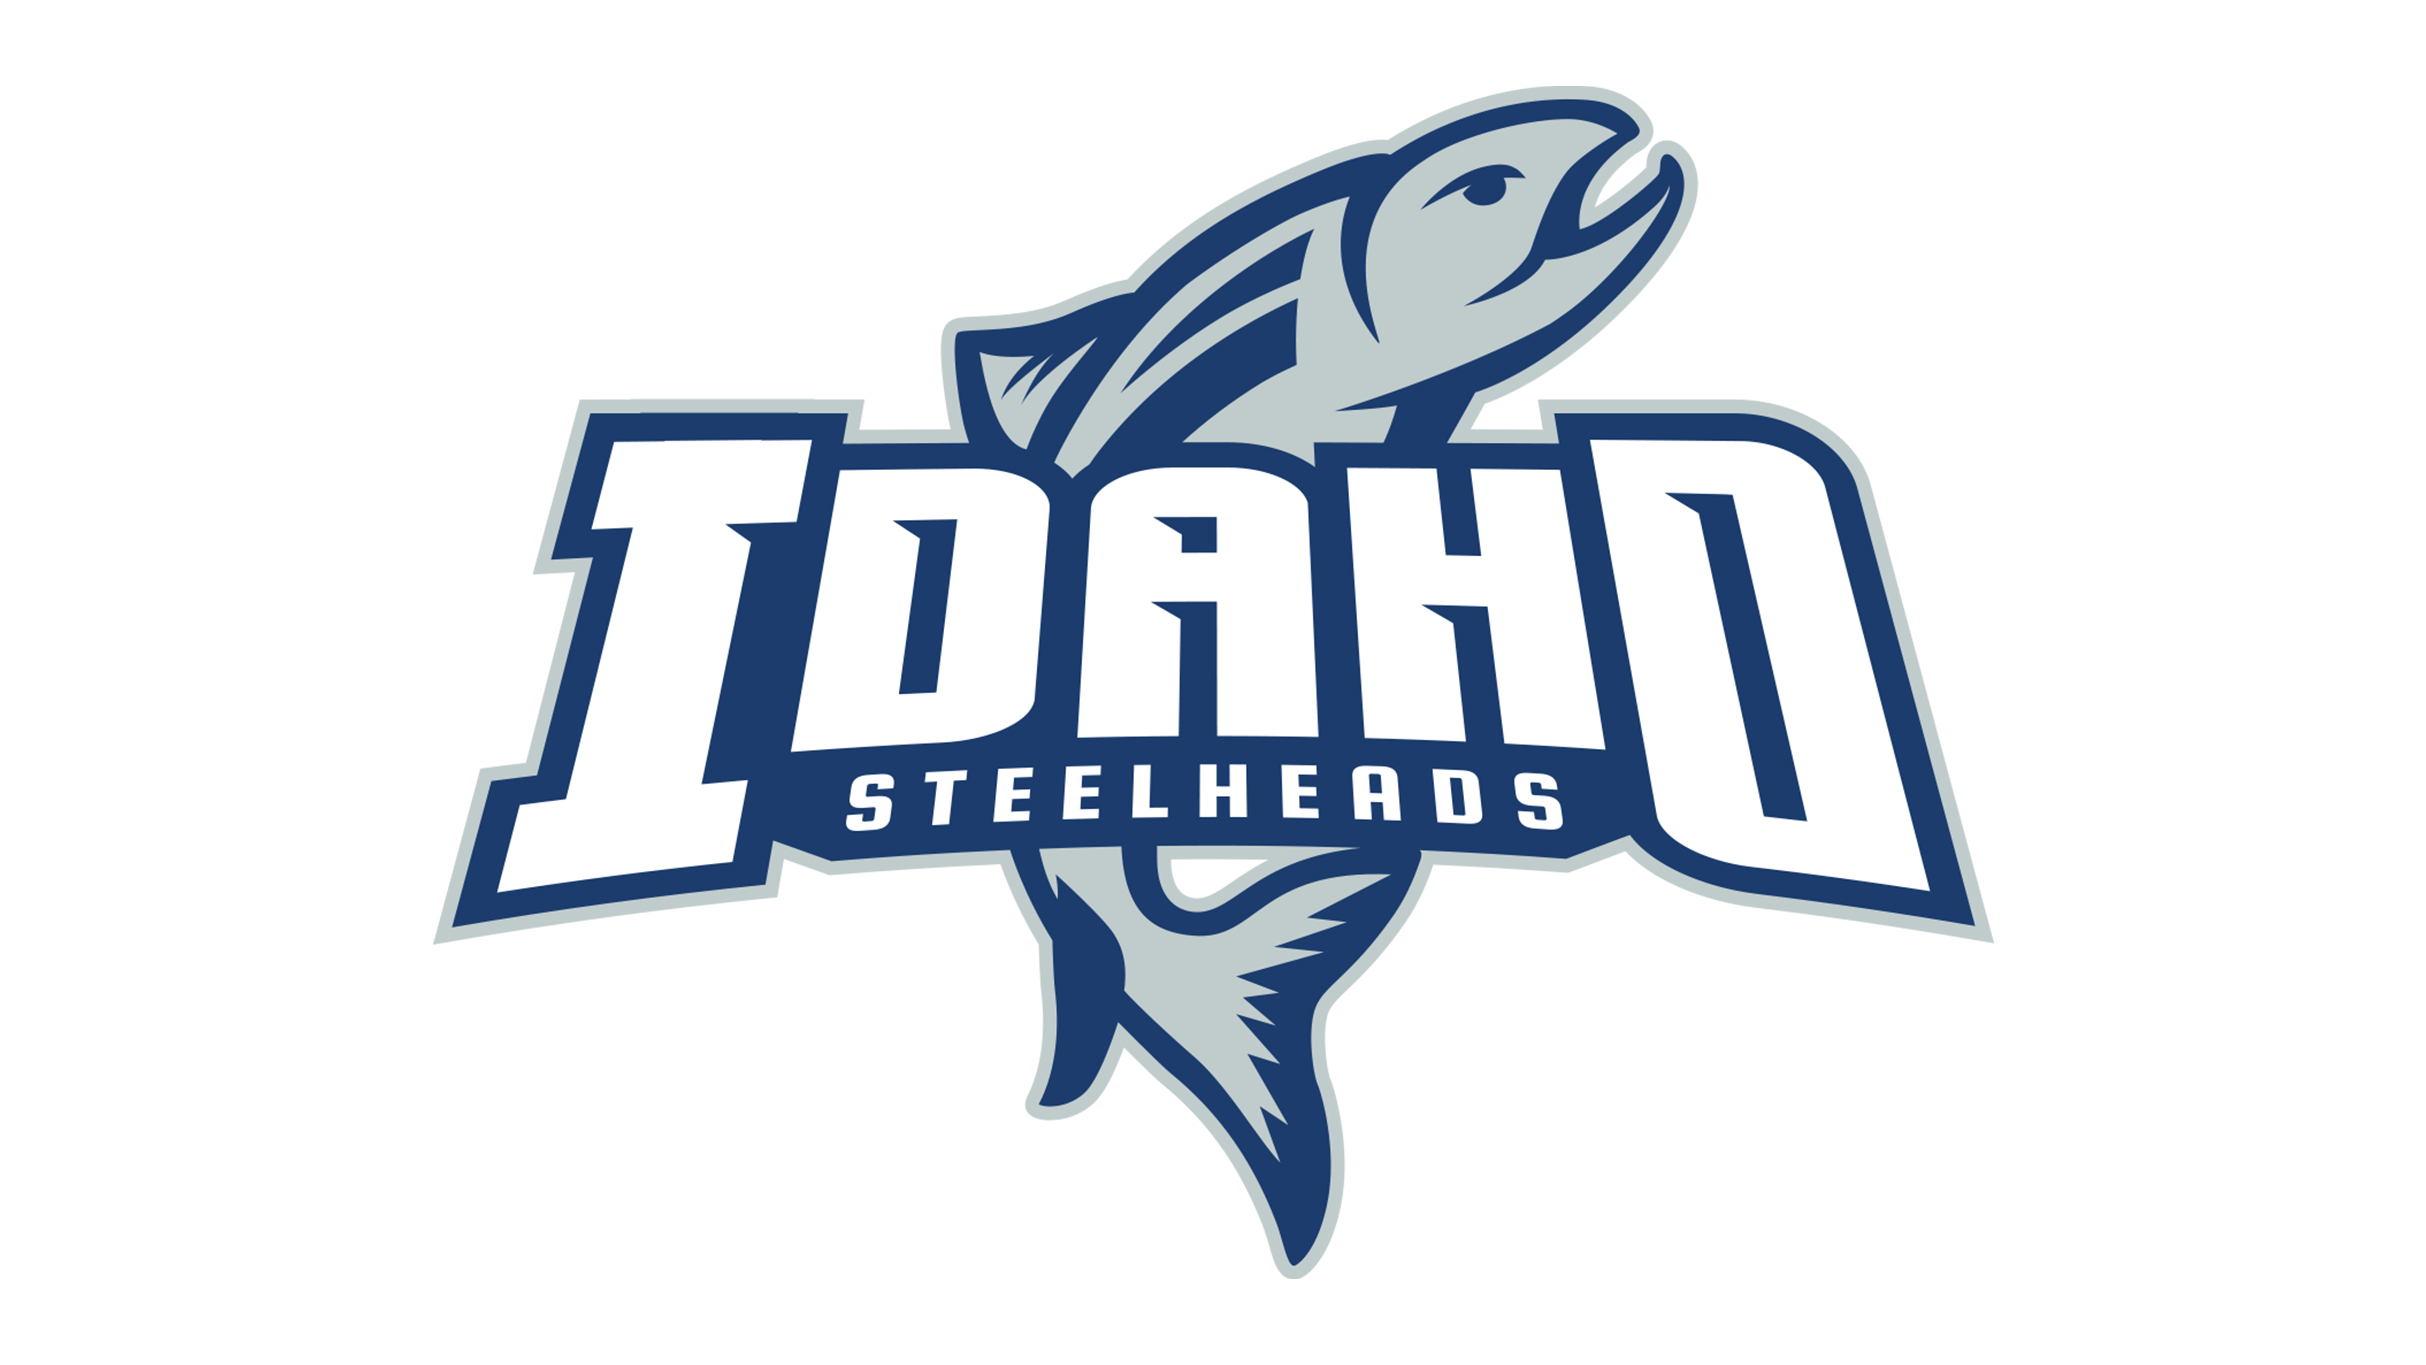 Idaho Steelheads vs Kansas City Mavericks